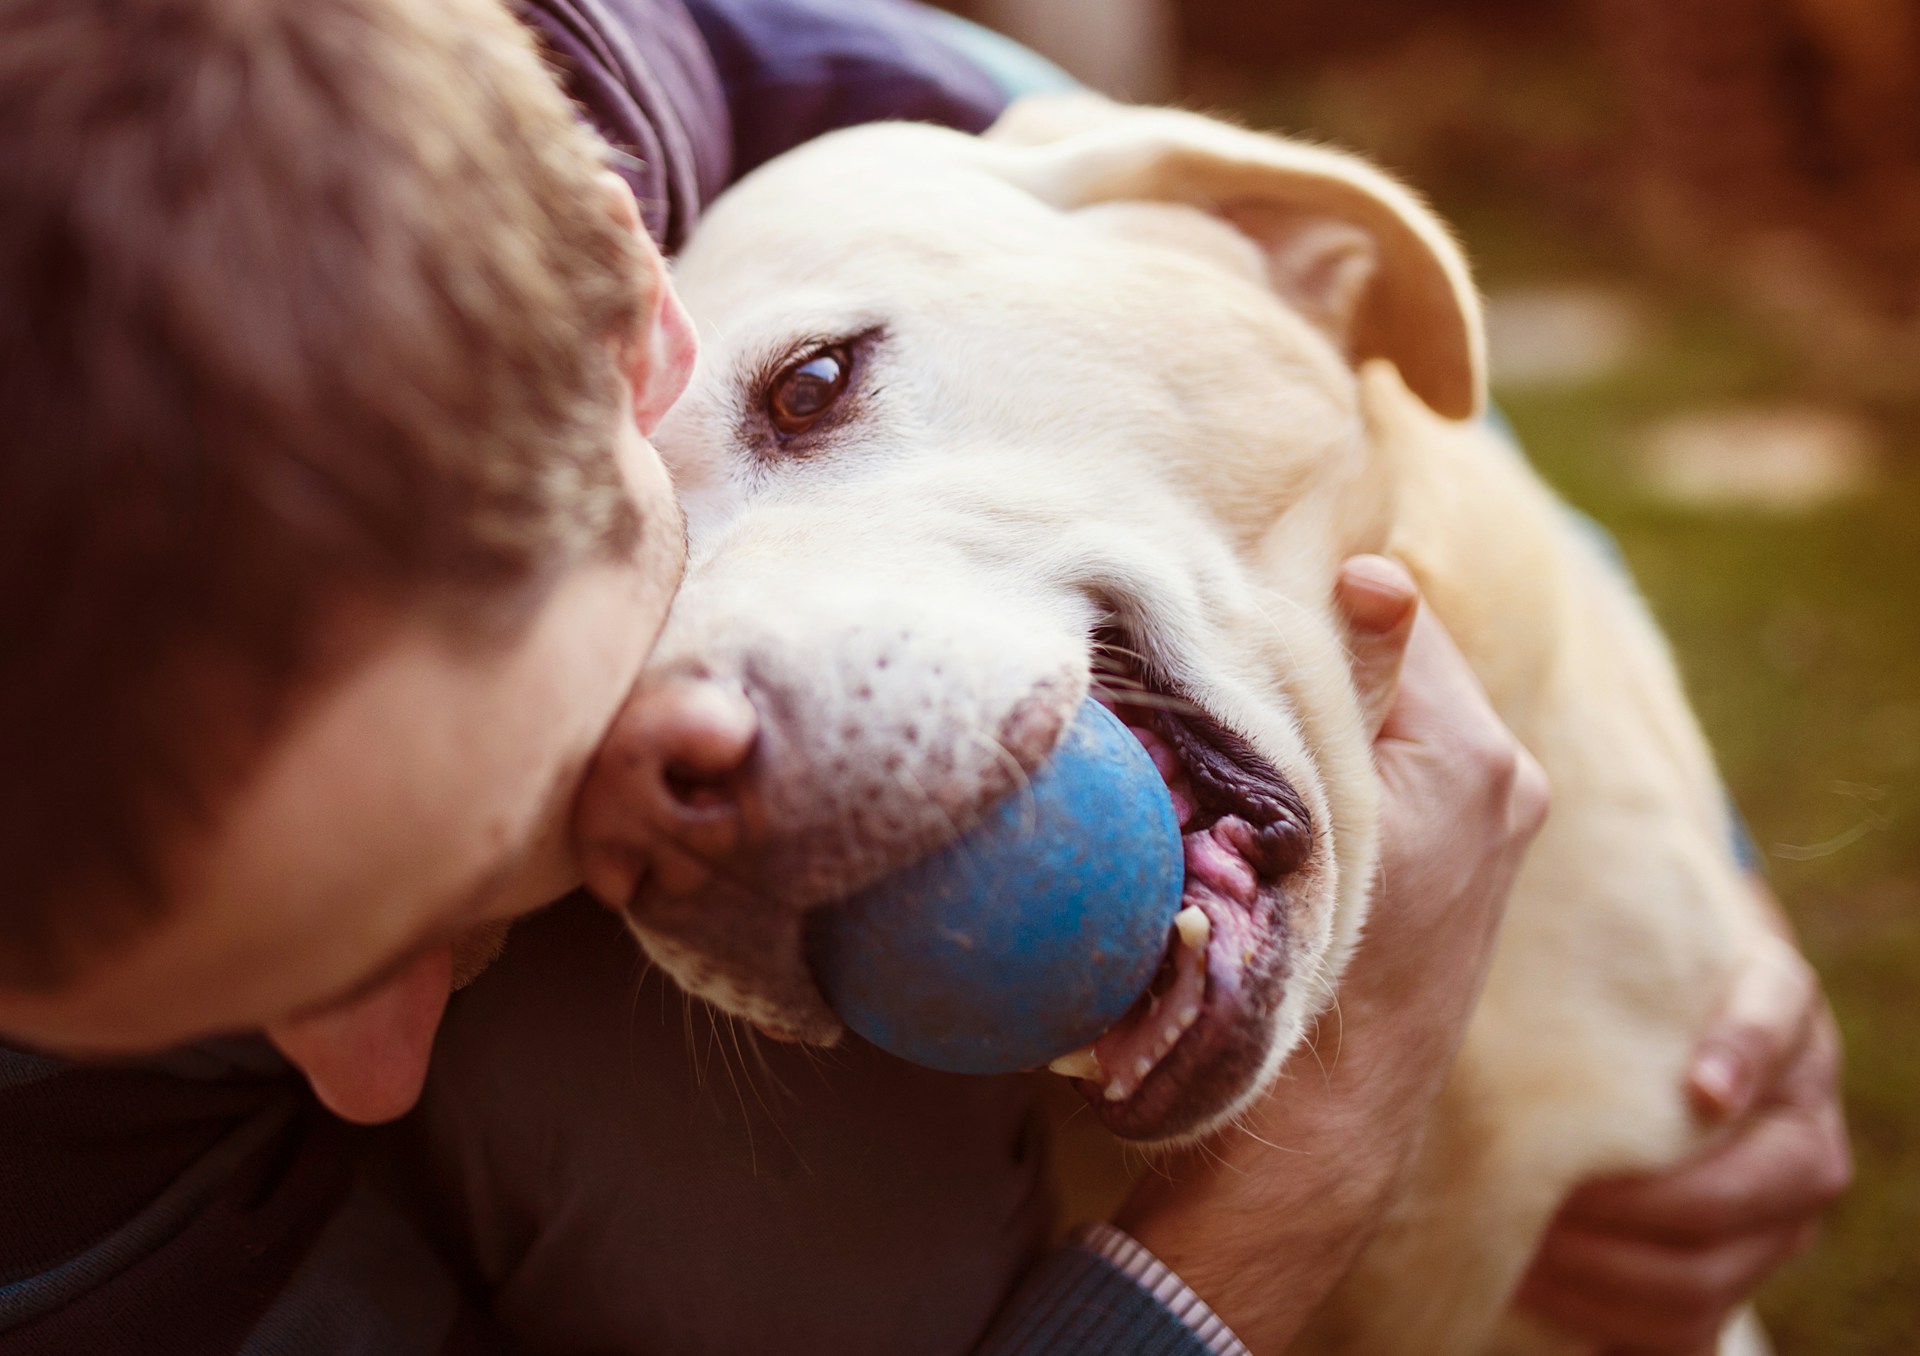 En man som leker med en hund med blå boll i munnen